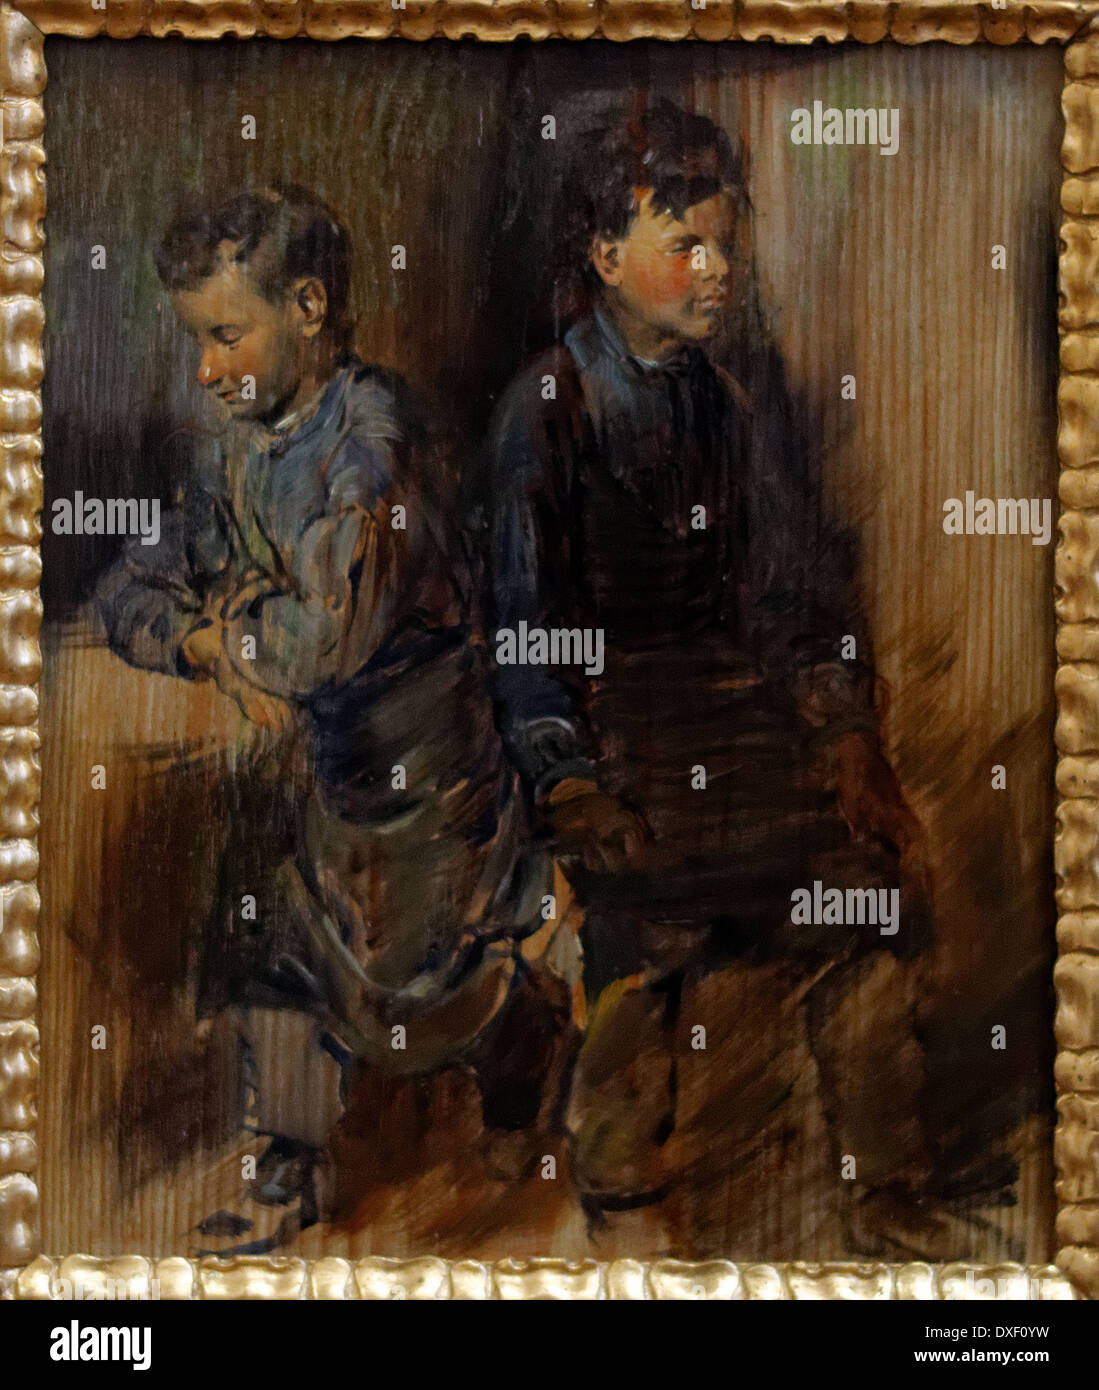 Wilhelm Busch - The Two Cobbler's Apprentices - 1875 - XIX th century - German school - Alte Nationalgalerie - Berlin Stock Photo